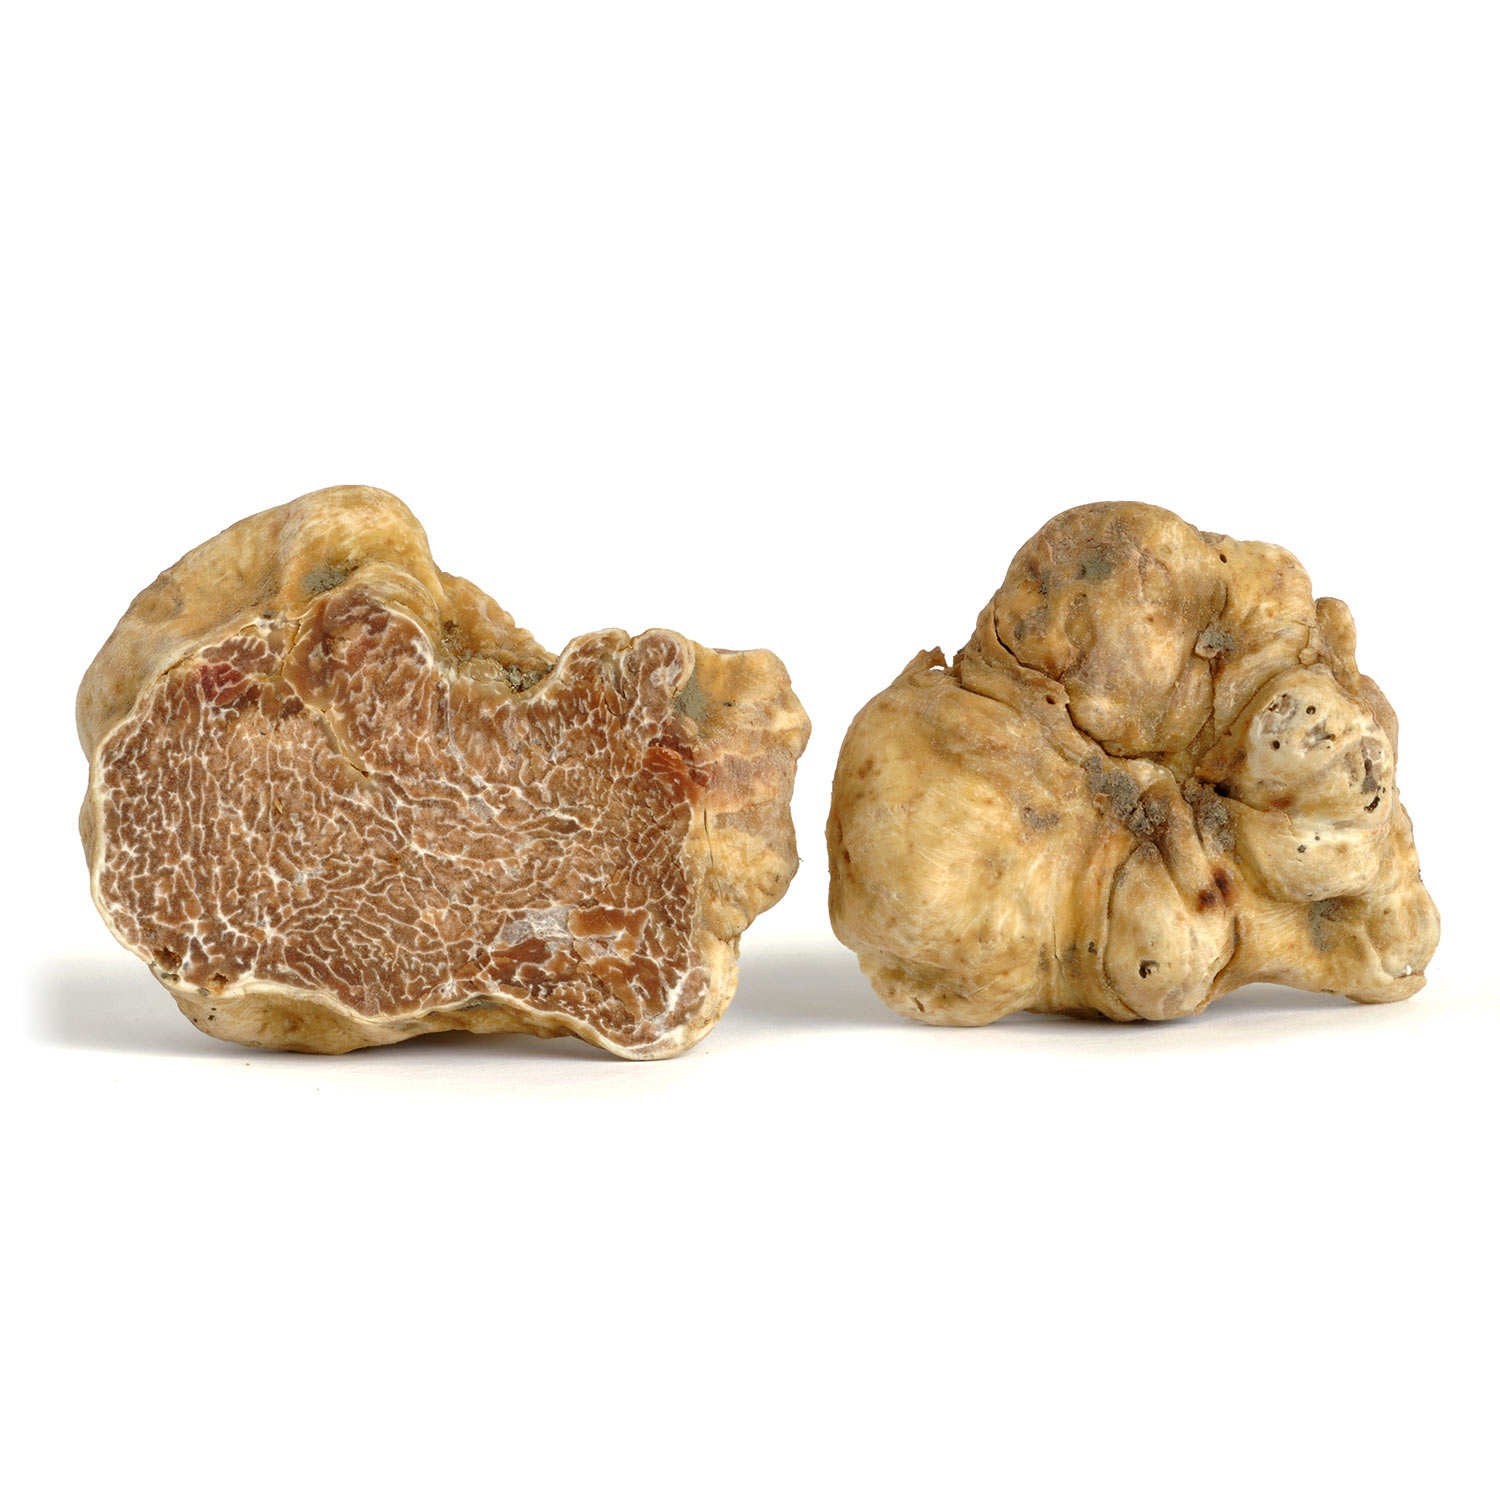 Fresh White Truffles - (Tuber Magnatum Pico) - Trufficulteurs d'Alba